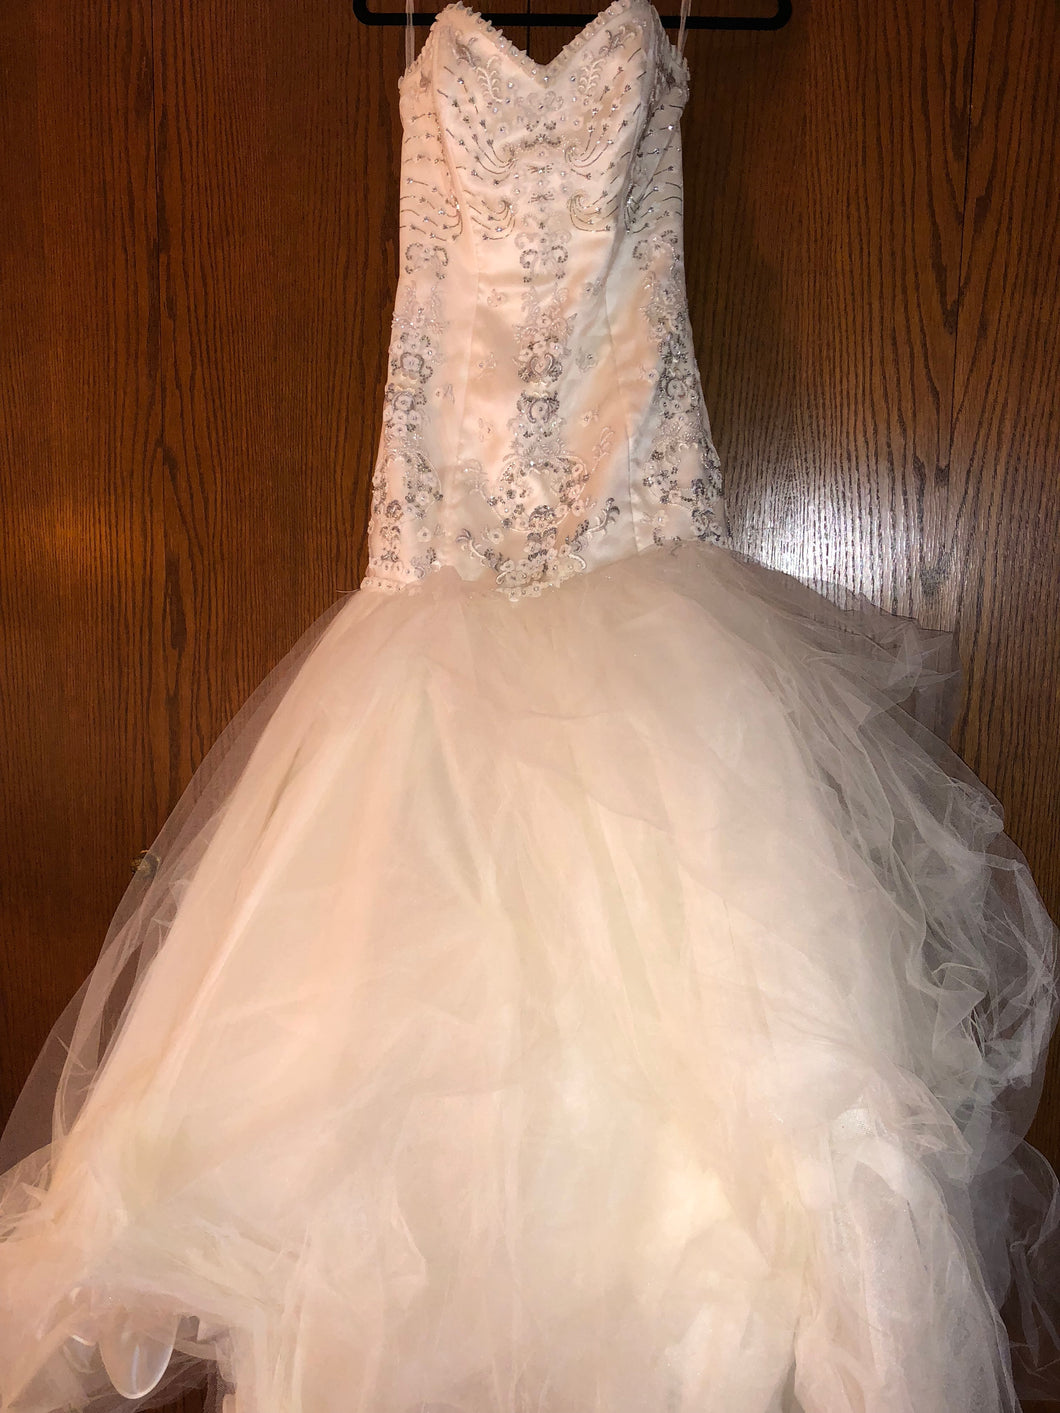 Exquisite Bride 'Zoe' size 10 new wedding dress front view on hanger